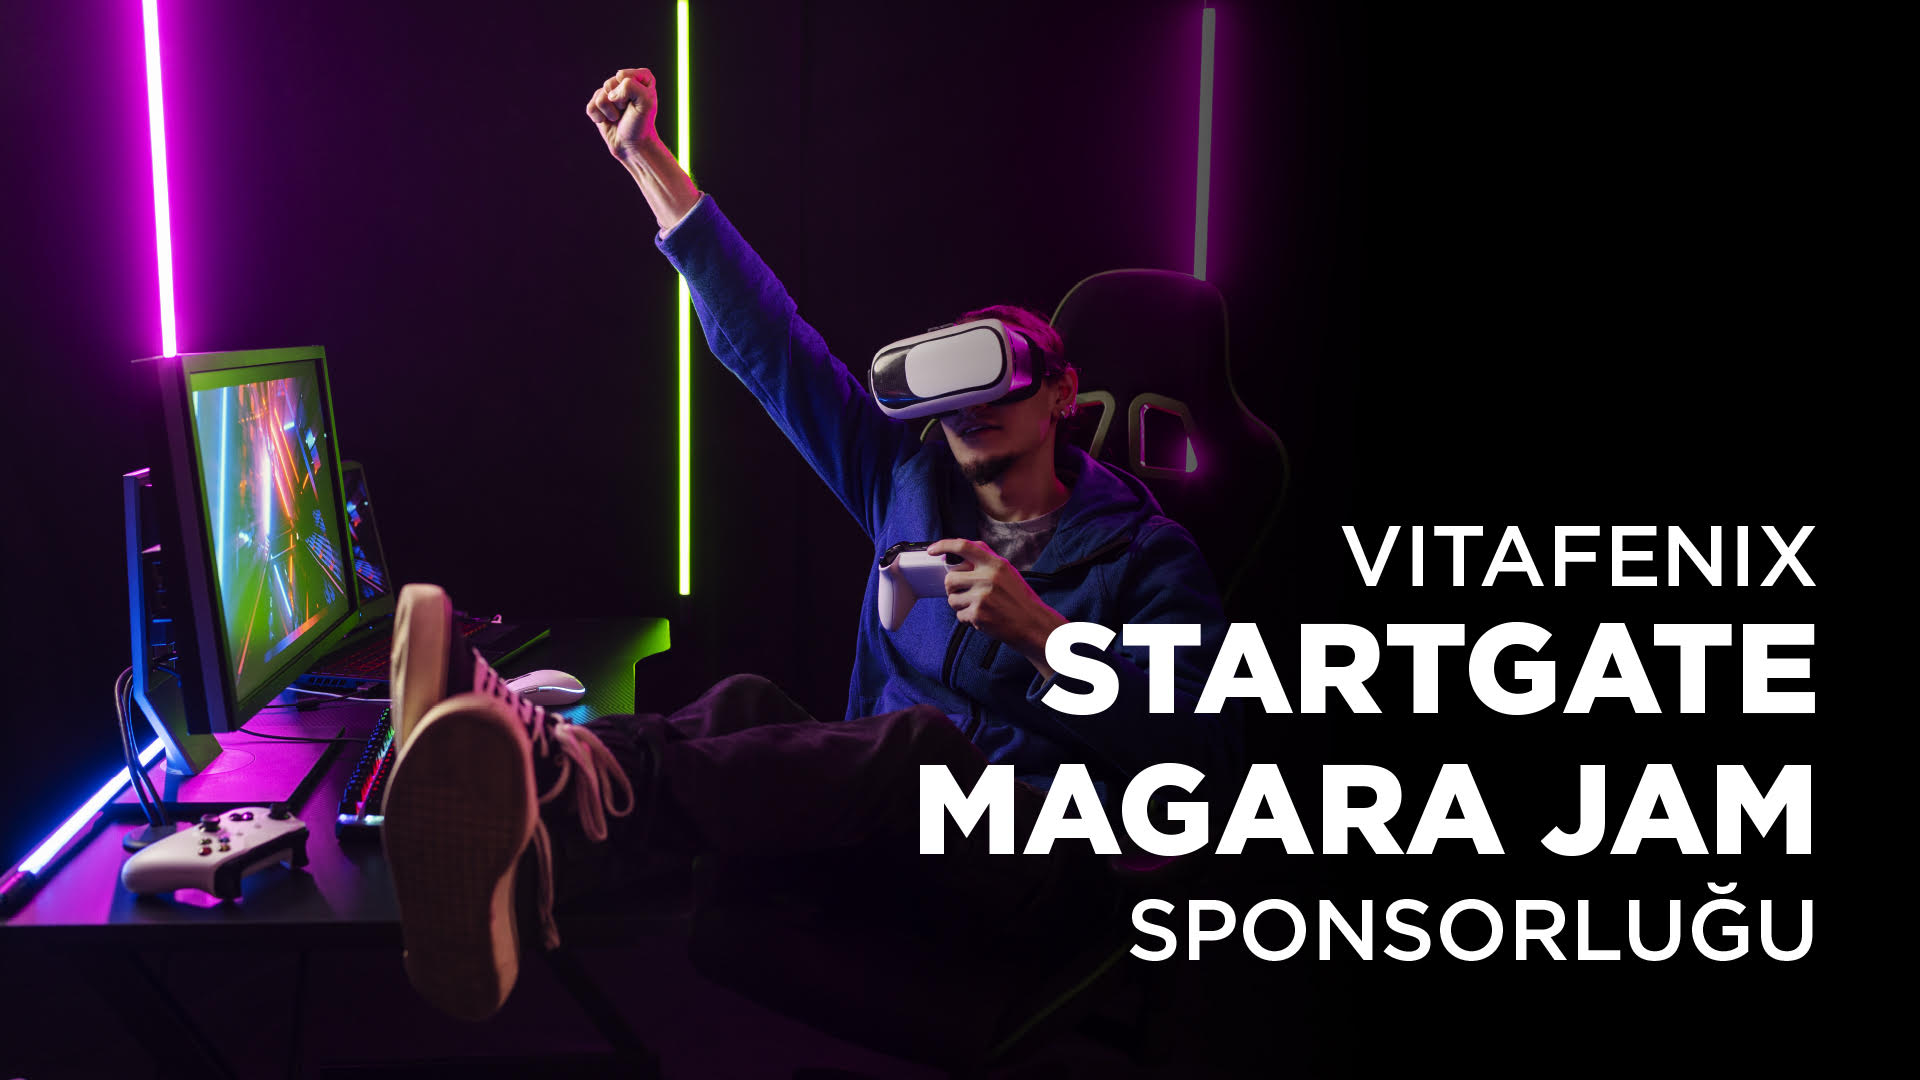 Vitafenix StartGate Magara Jam Sponsorluğu - Vitafenix